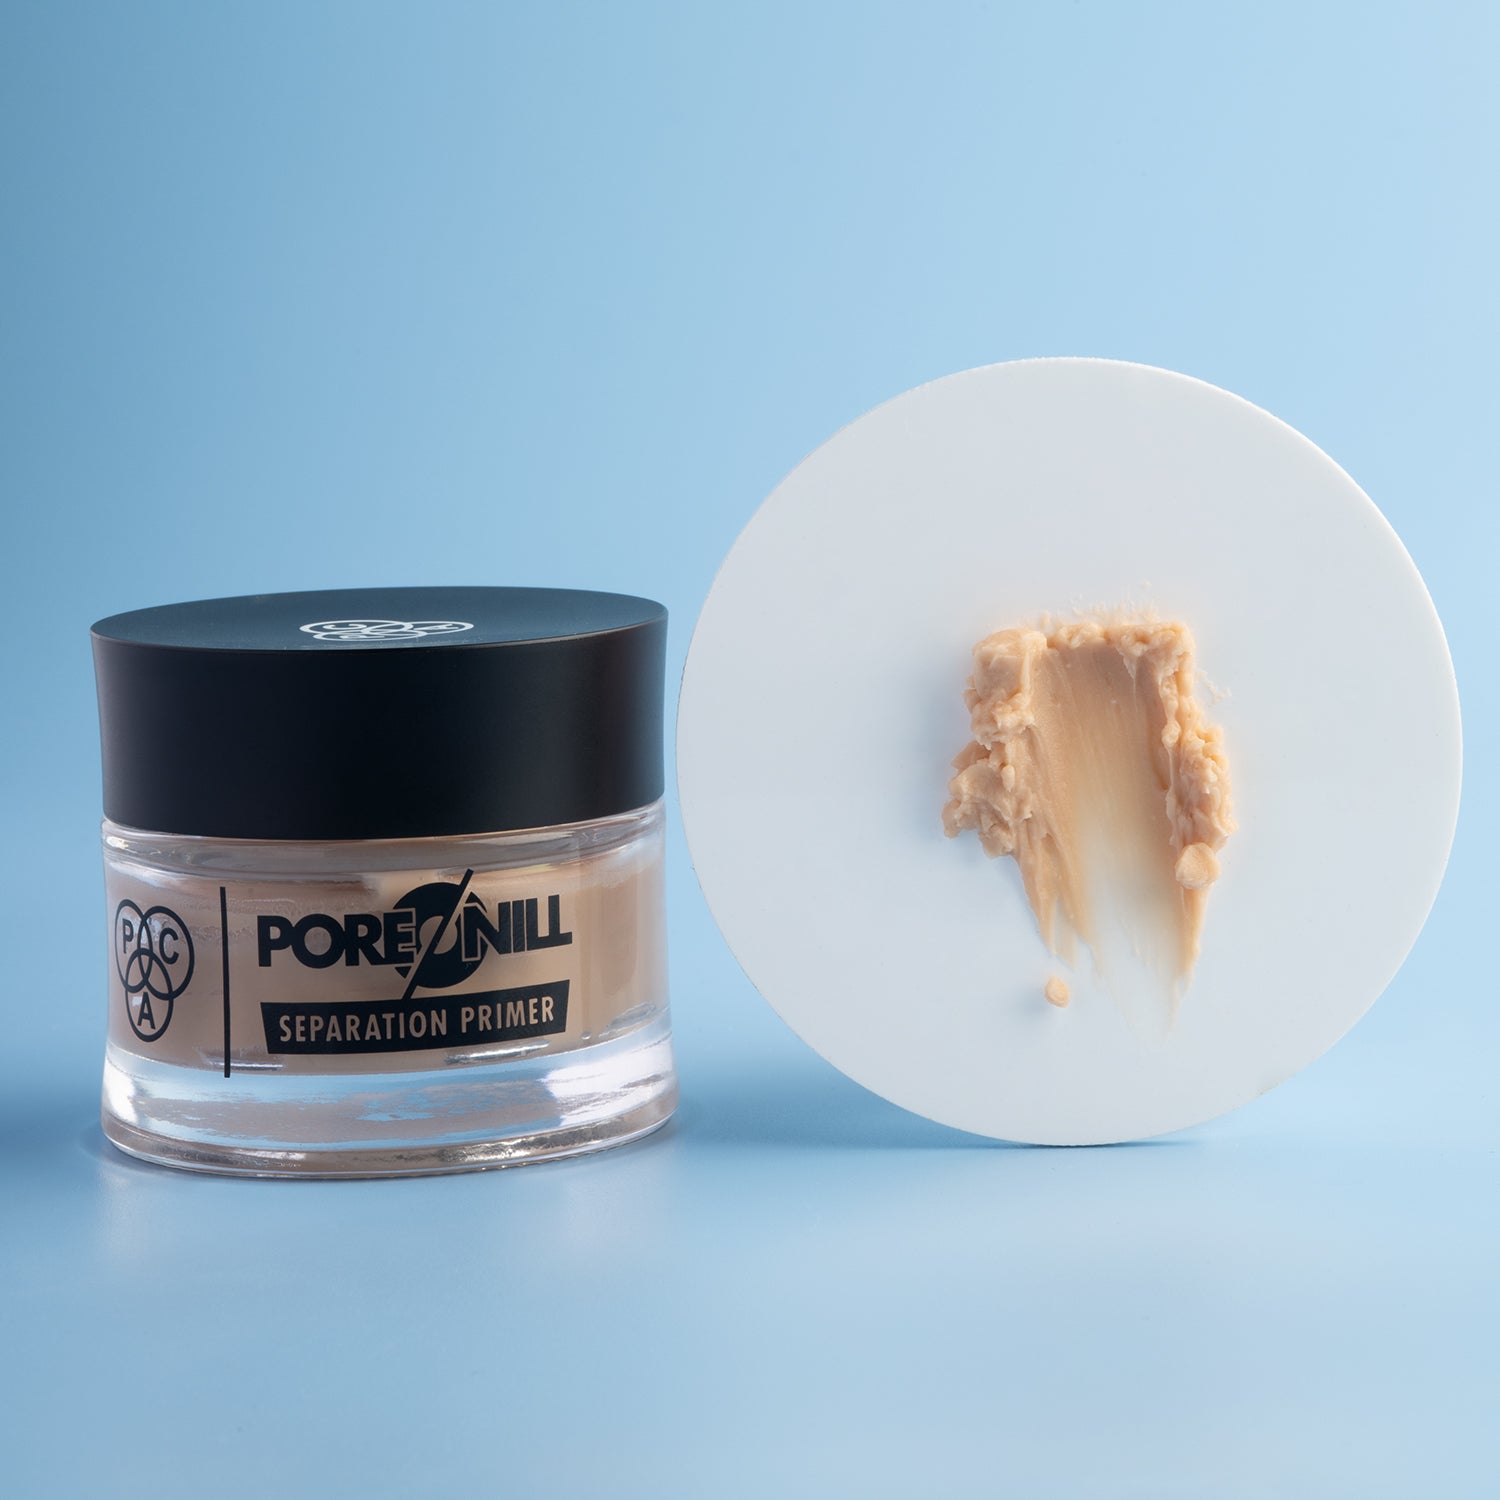 PAC Cosmetics Pore-O-Nill Separation Primer (35 gm) (Cream Based Based)